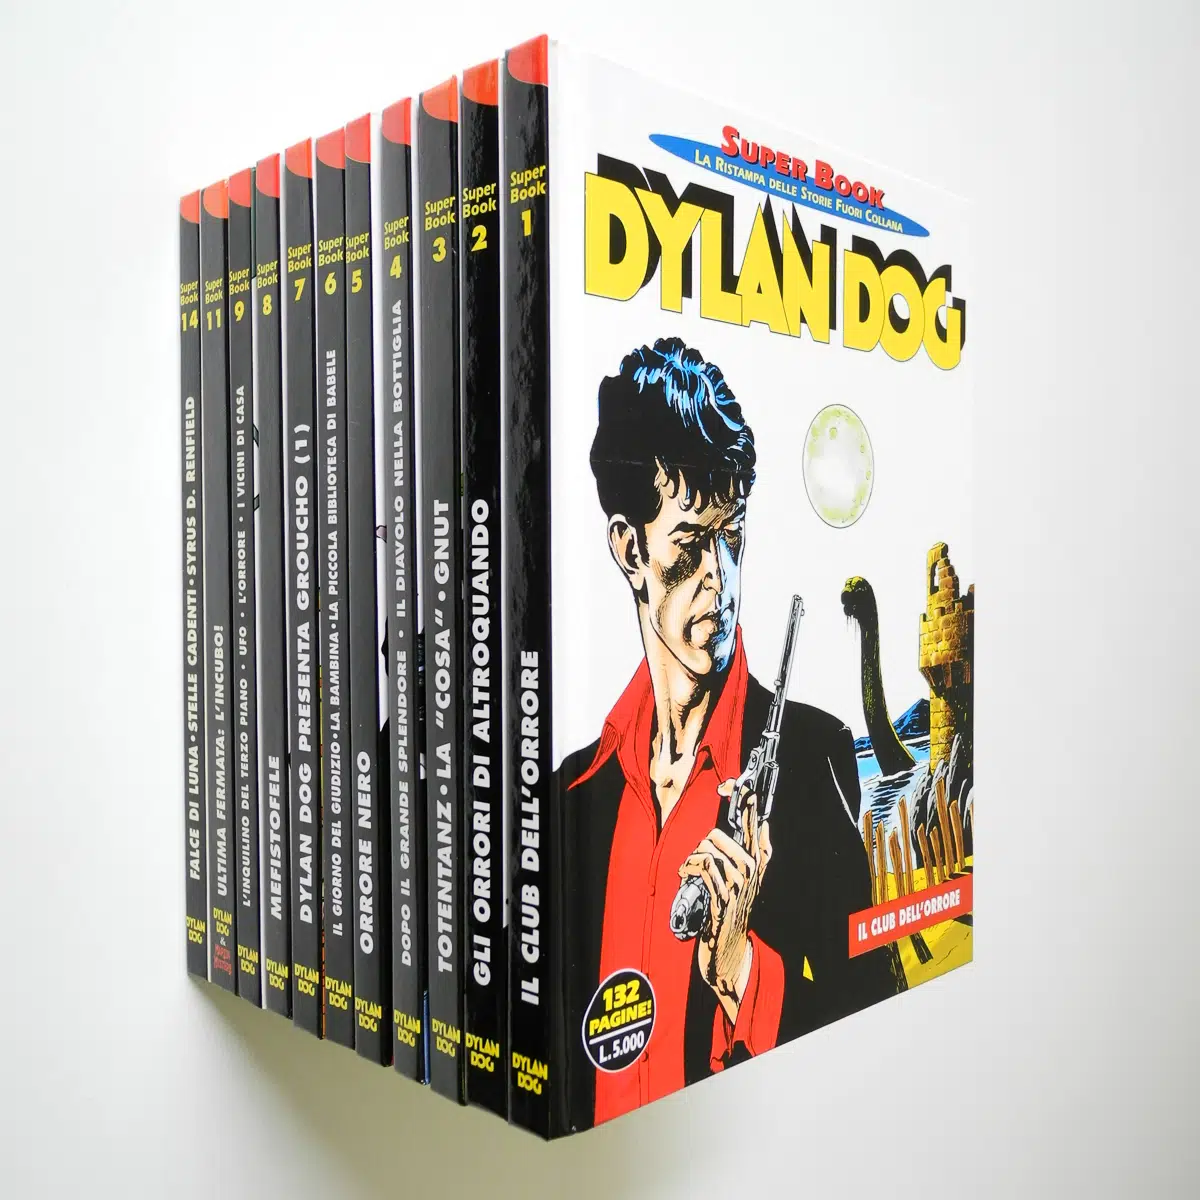 Dylan Dog Super Book Sequenza Completa 1-9, 11, 14